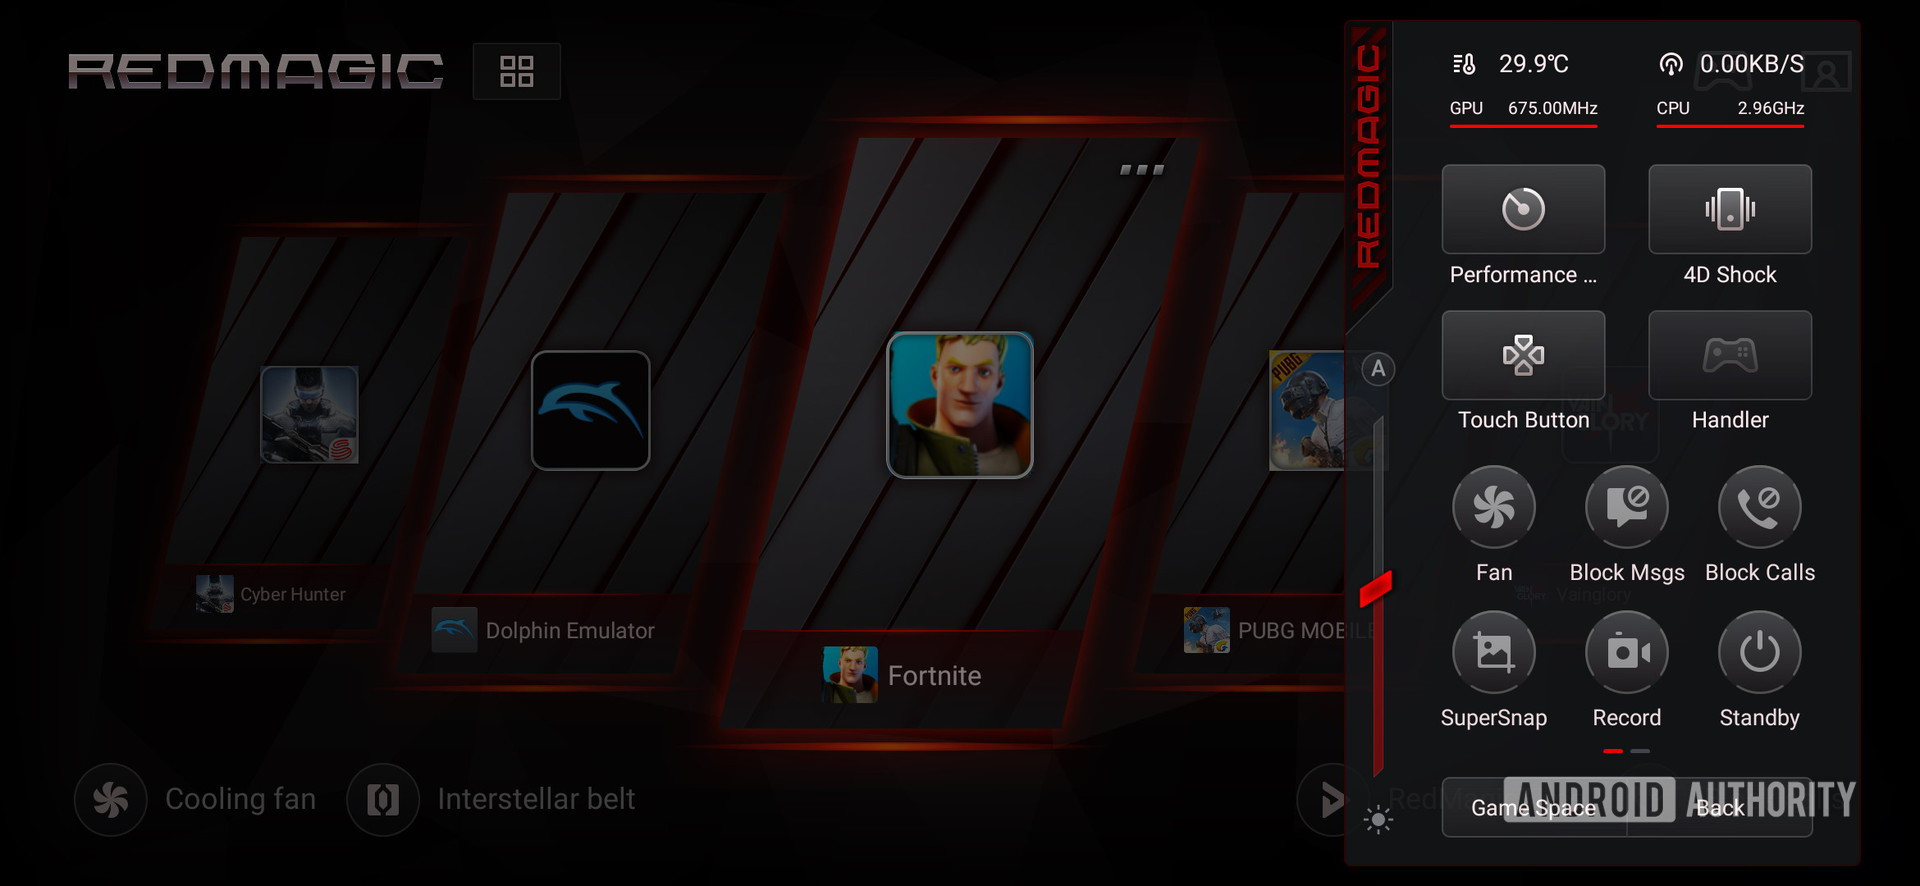 Red Magic 3S Game Space menu screenshot